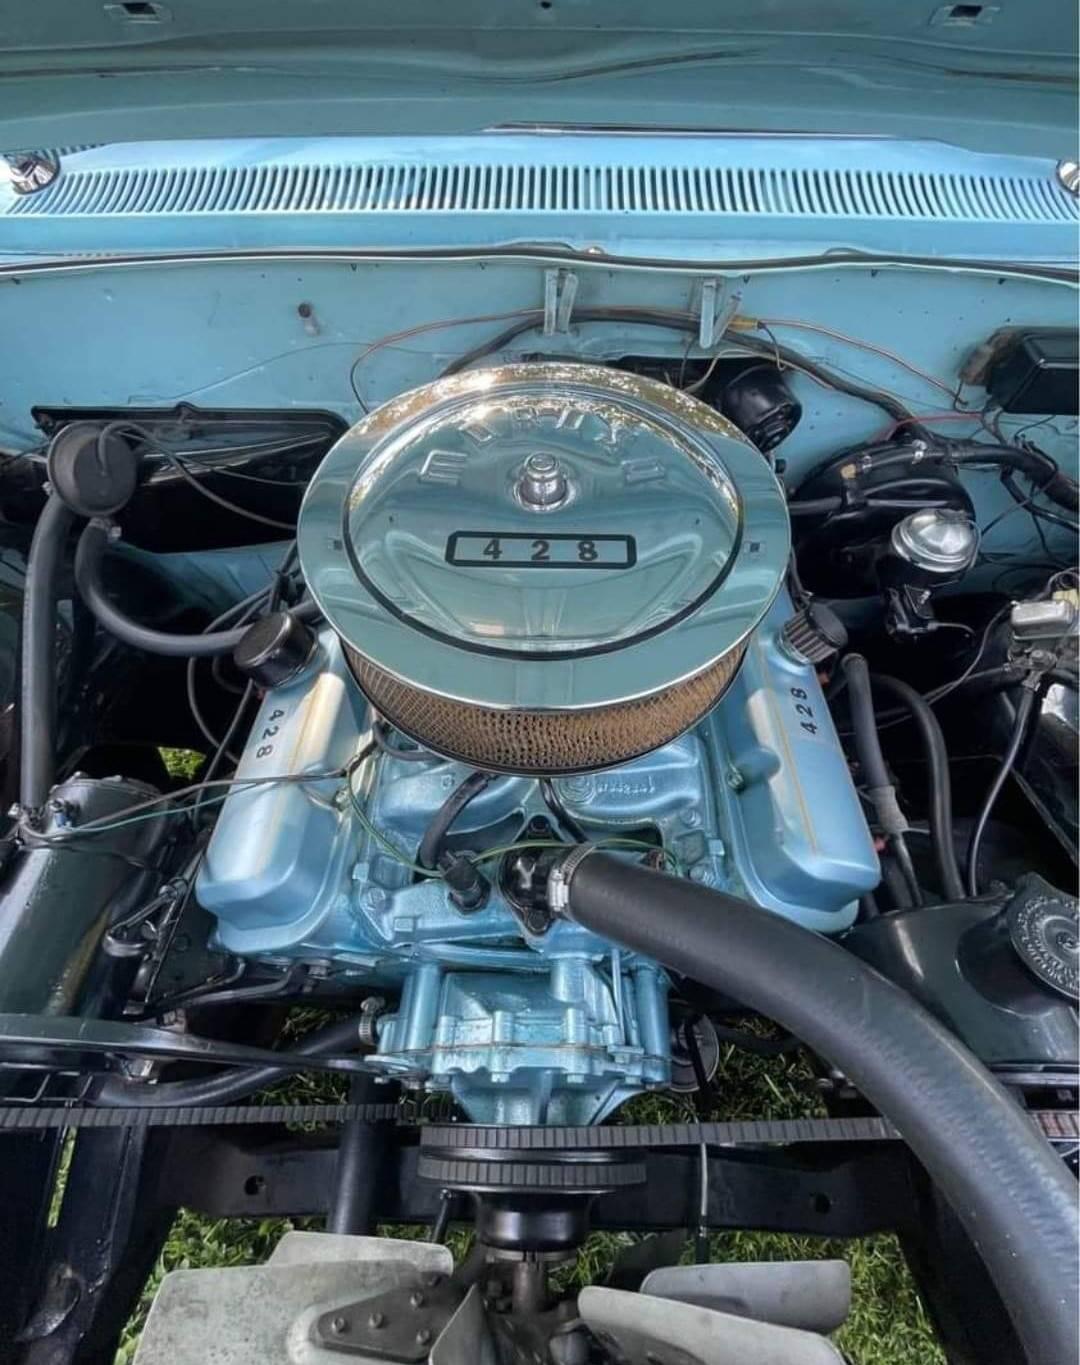 1962 Pontiac Catalina Convertible. 428 ci V8 engine, automatic transmission